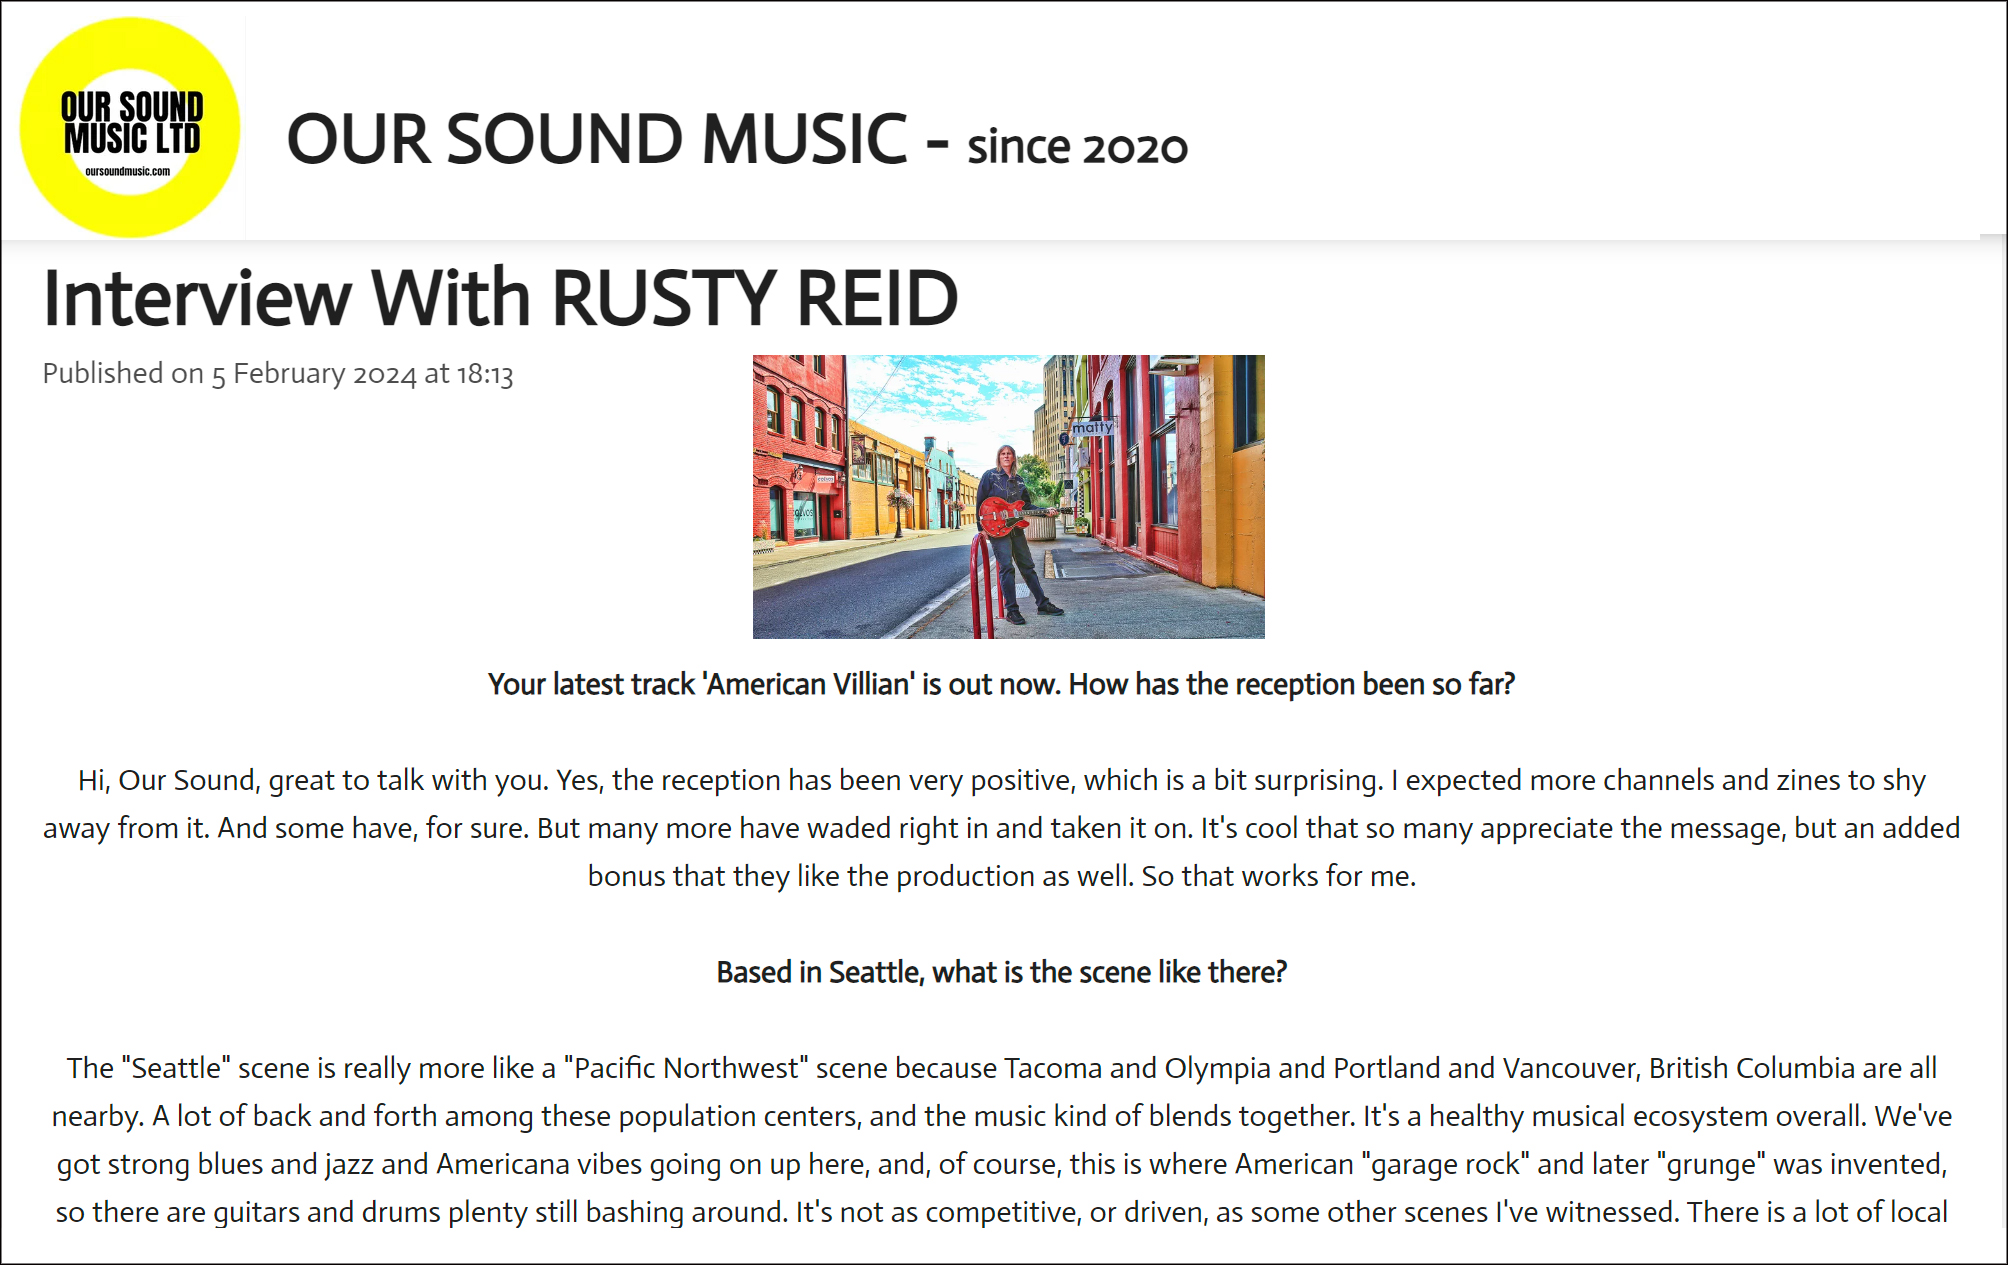 Rusty Reid, singer-songwriter